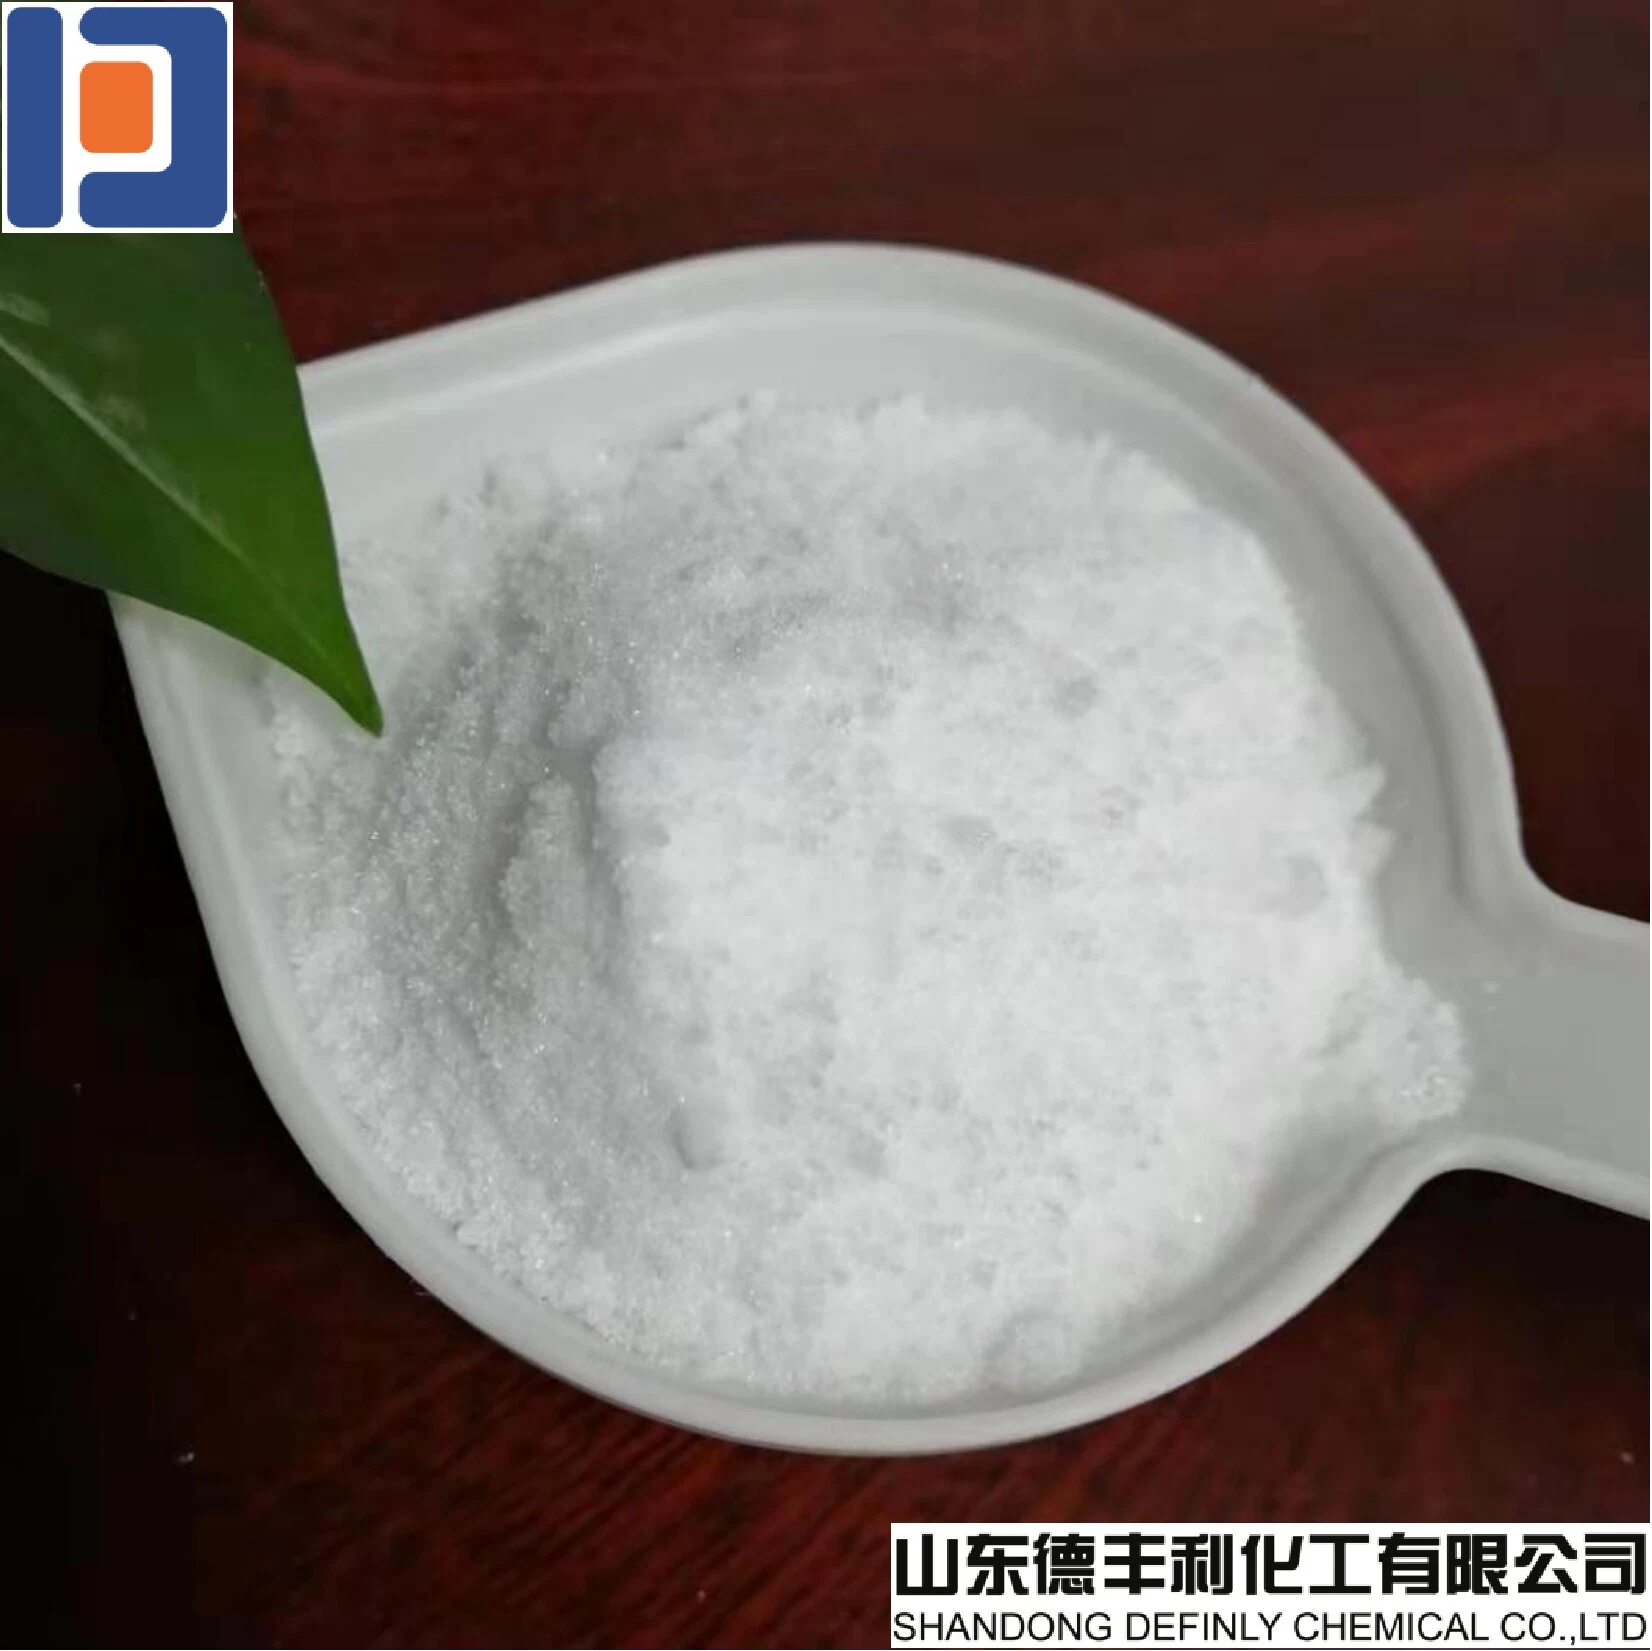 Factory Price Sodium Thiocyanate 98%Min CAS No.: 540-72-7